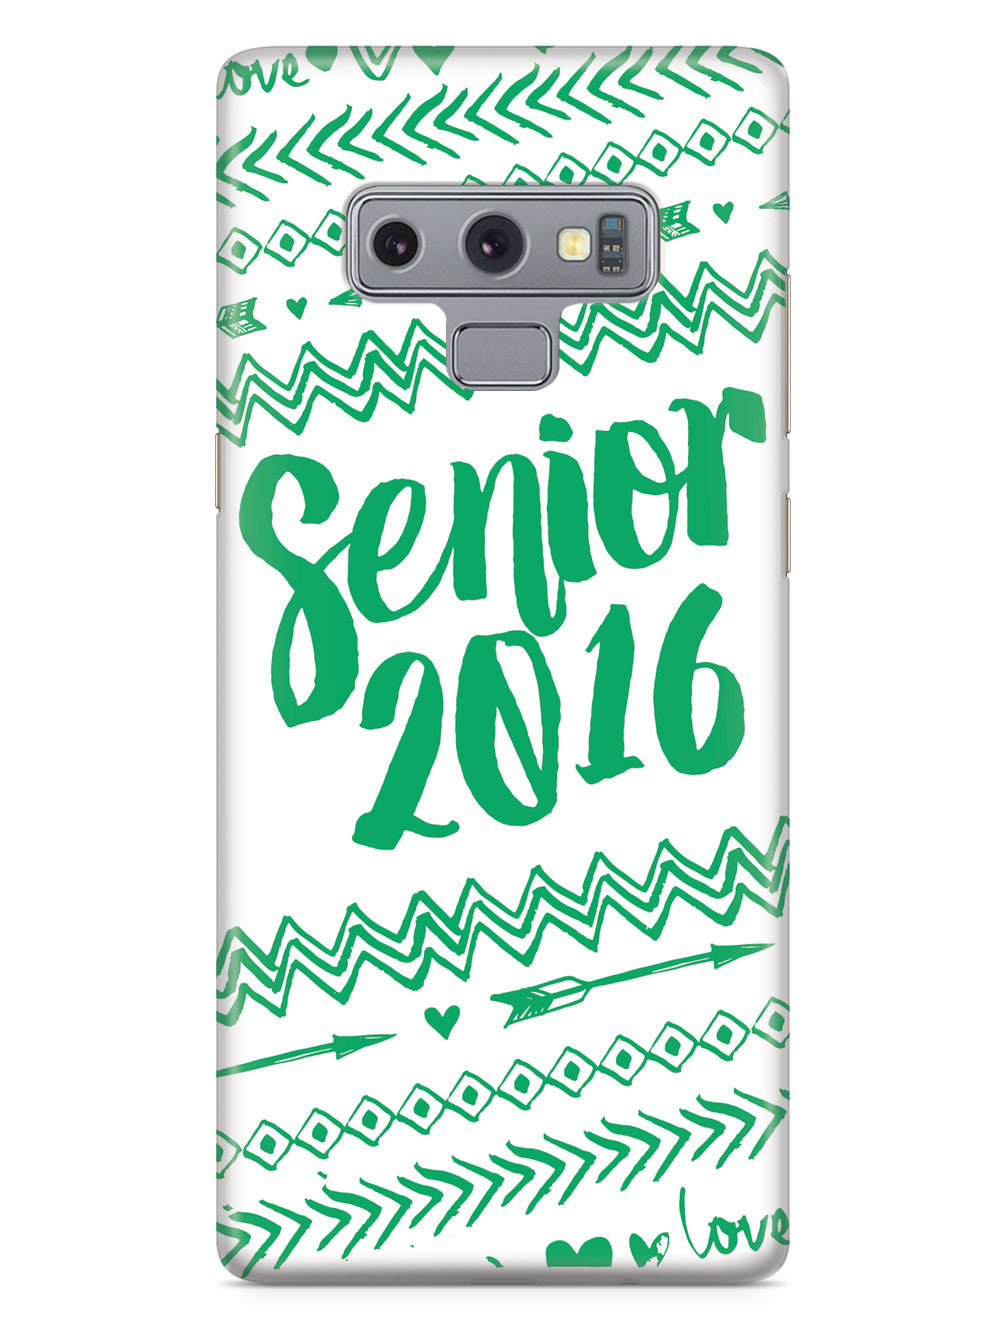 Senior 2016 - Green Case